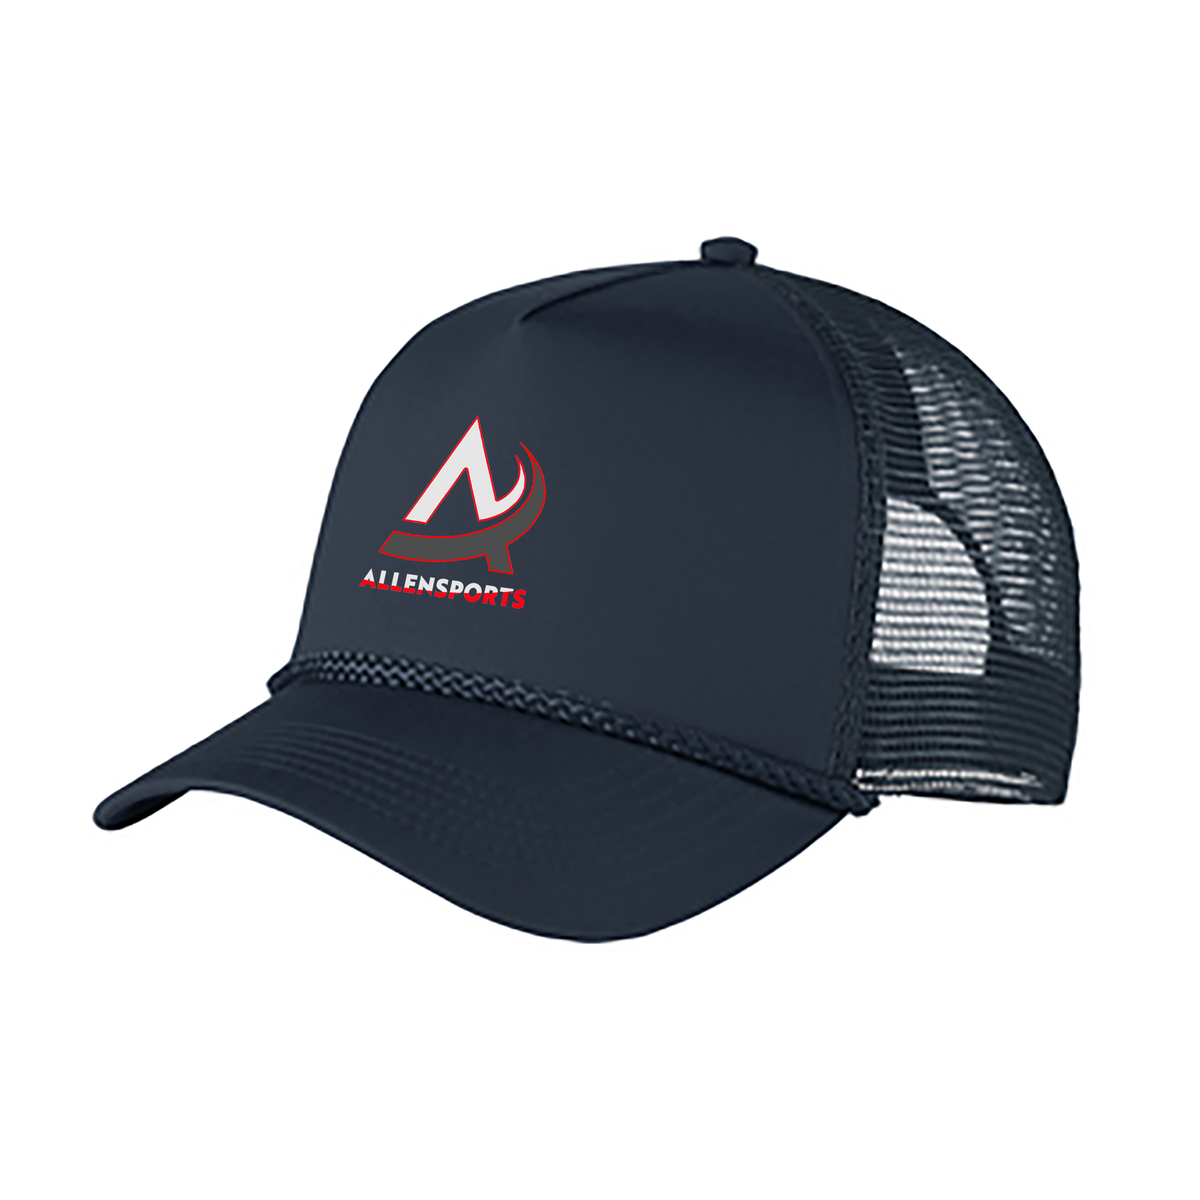 AllenSports 5-Panel Snapback Cap